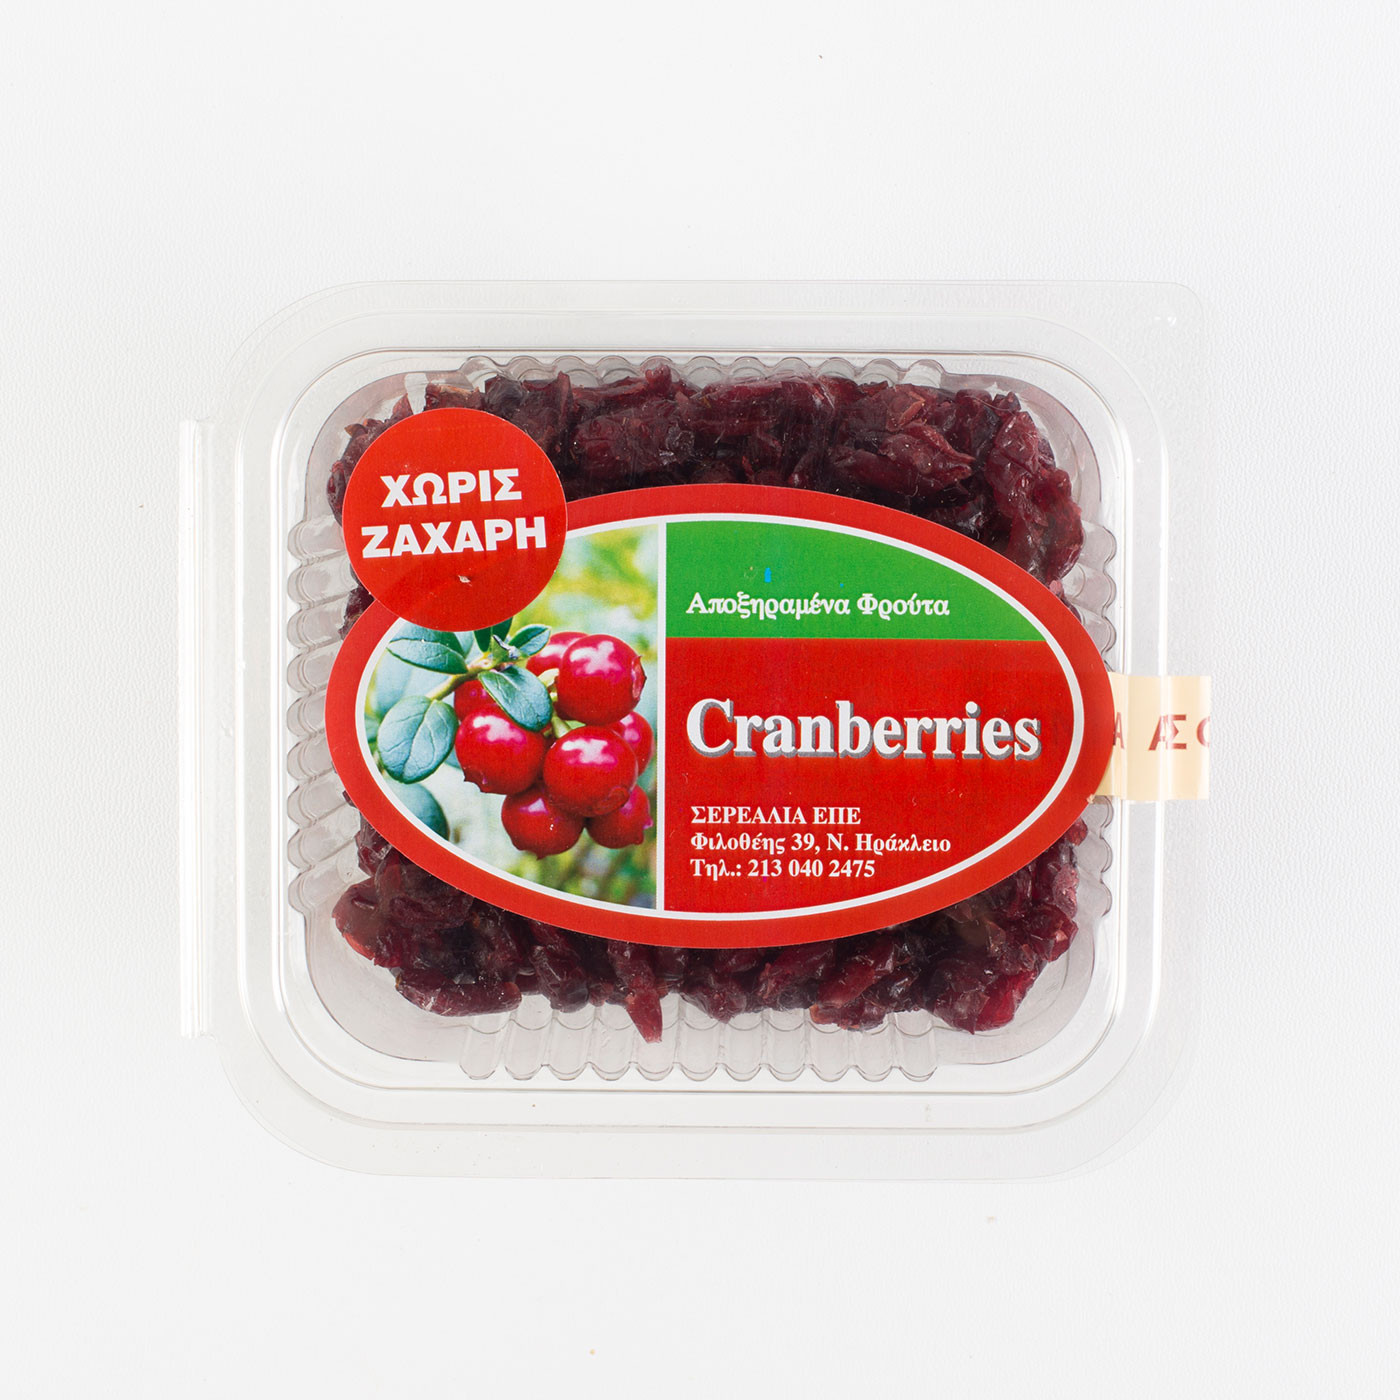 Cranberries Αποξηραμένα χωρίς ζάχαρη "Σερεάλια" 200 γρ.